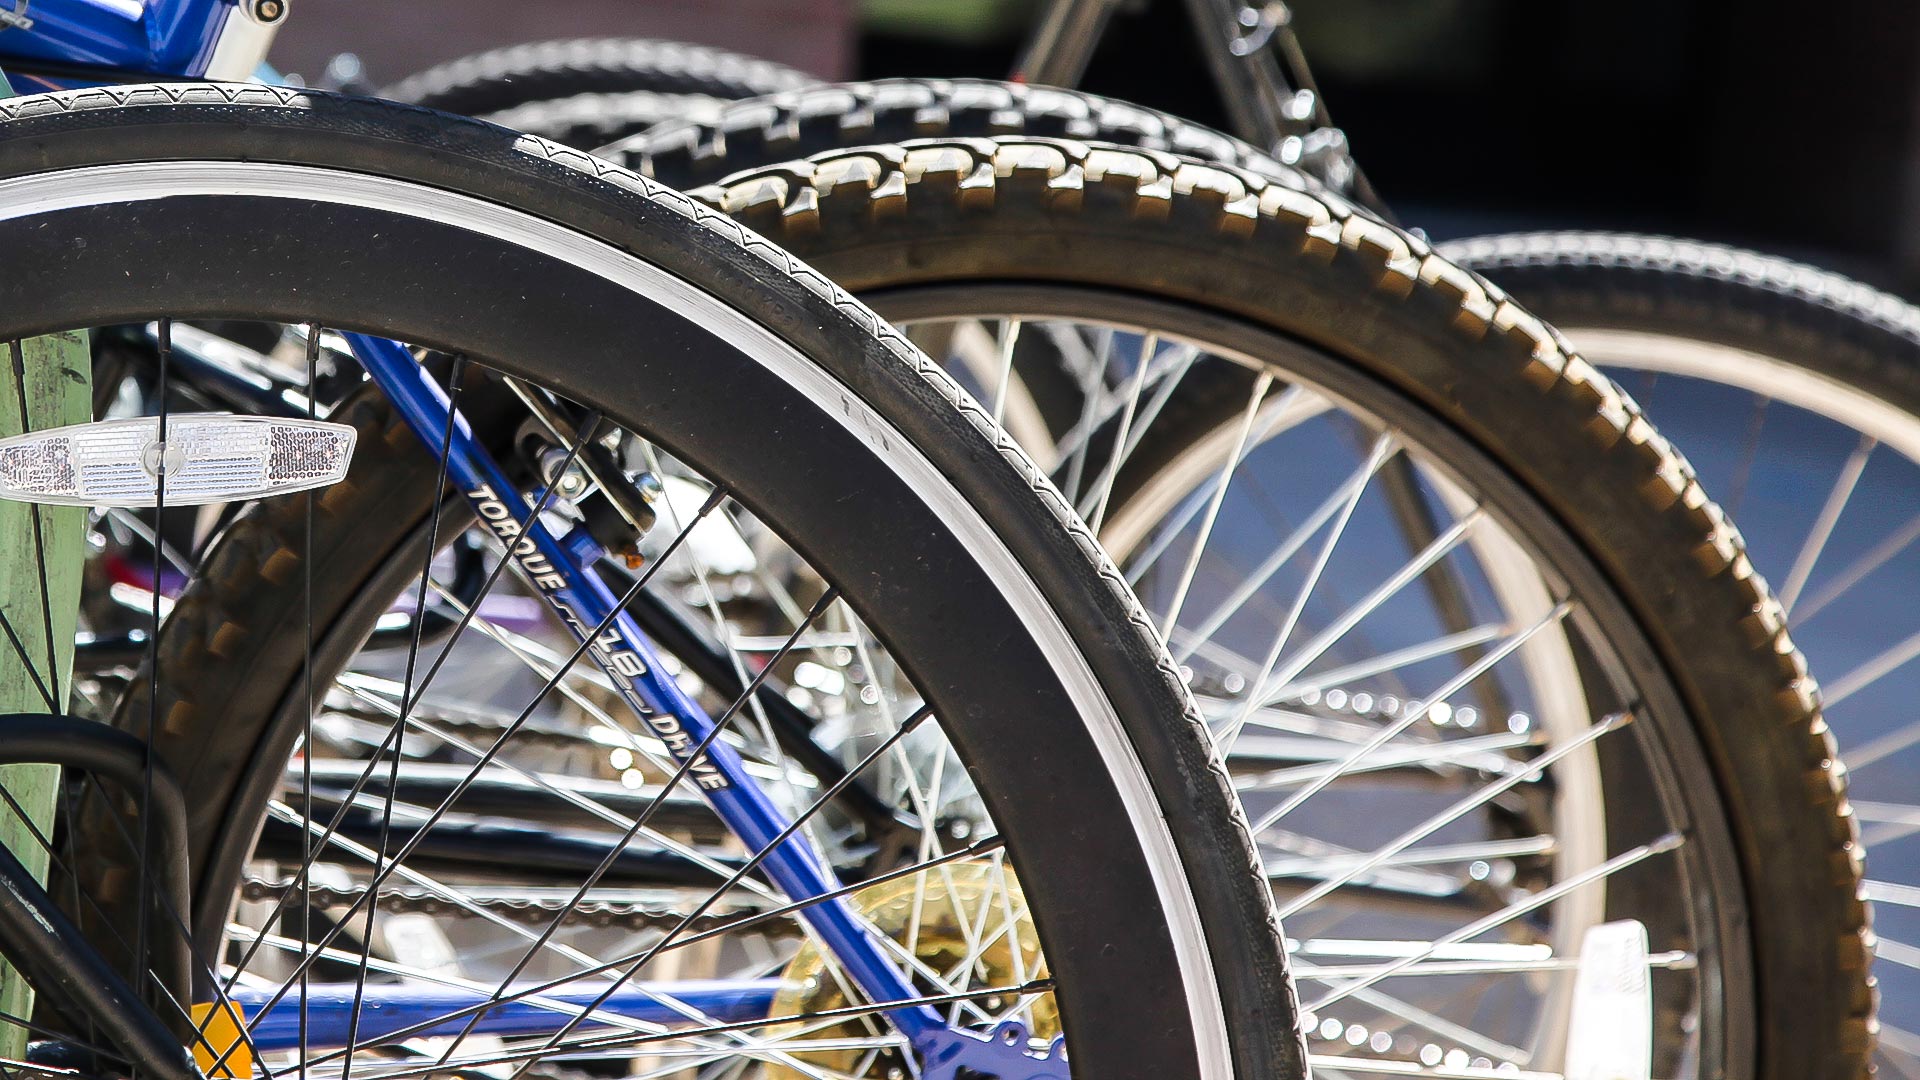 Bicycles on the University of Arizona campus.